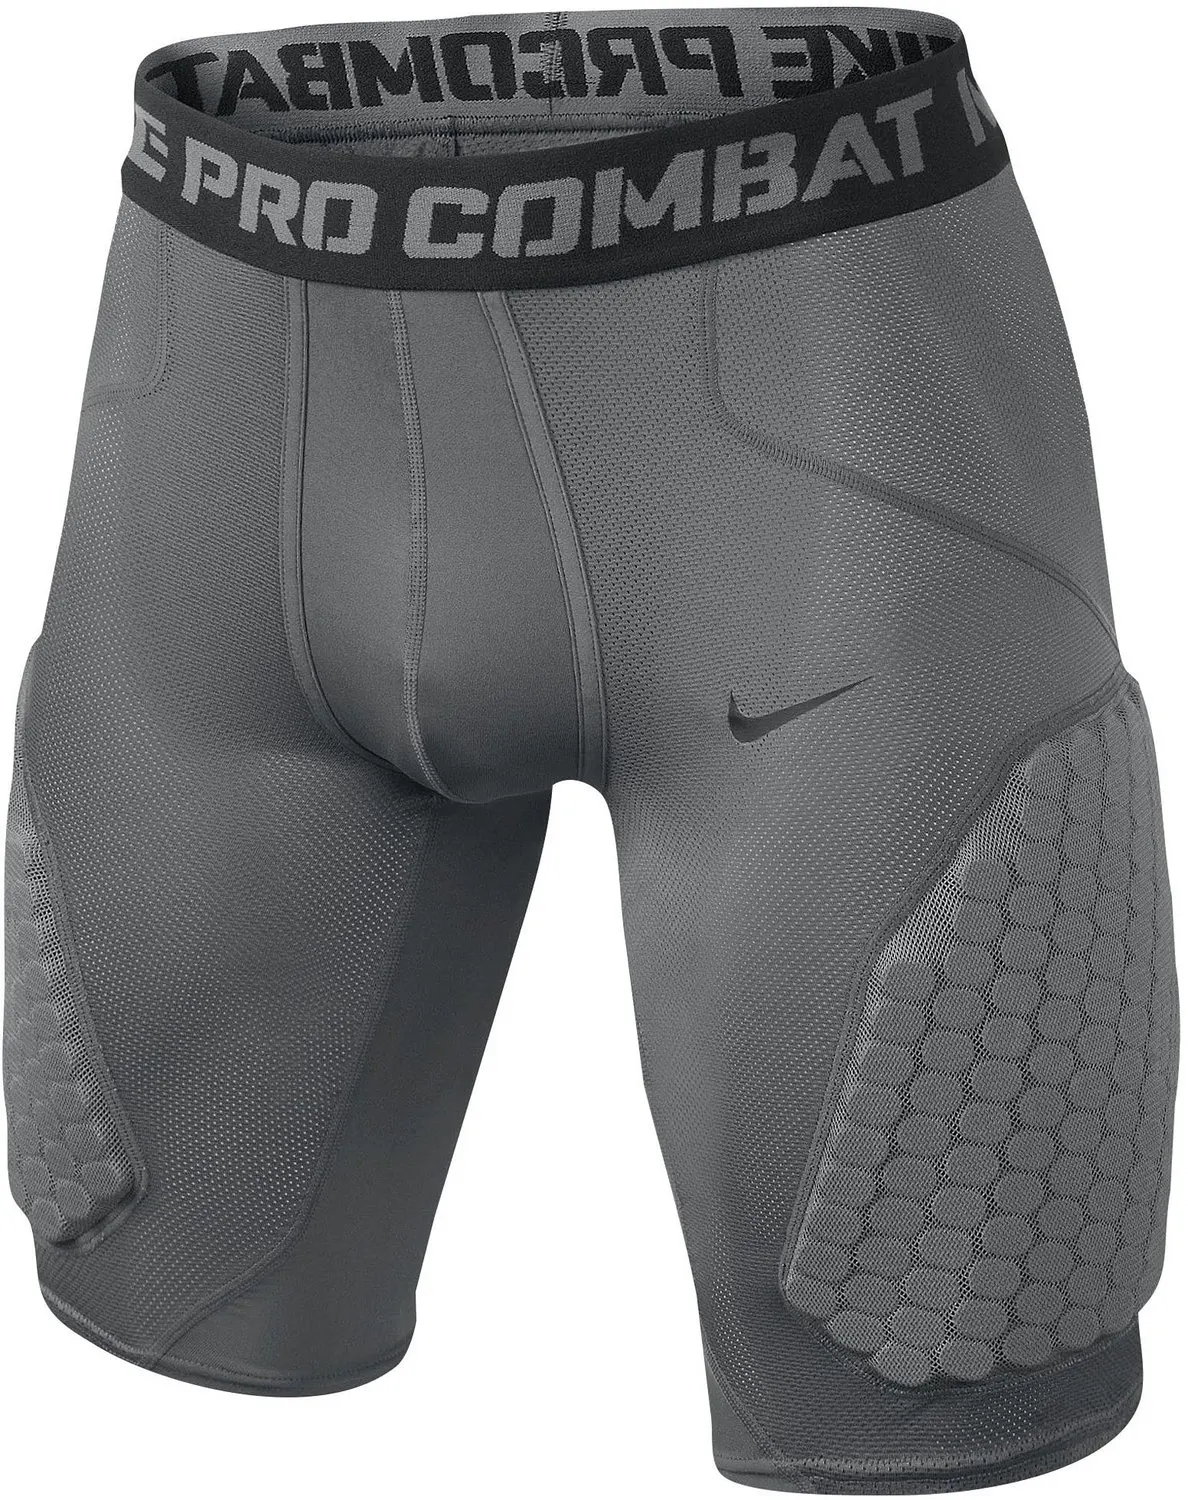 padded compression basketball shorts